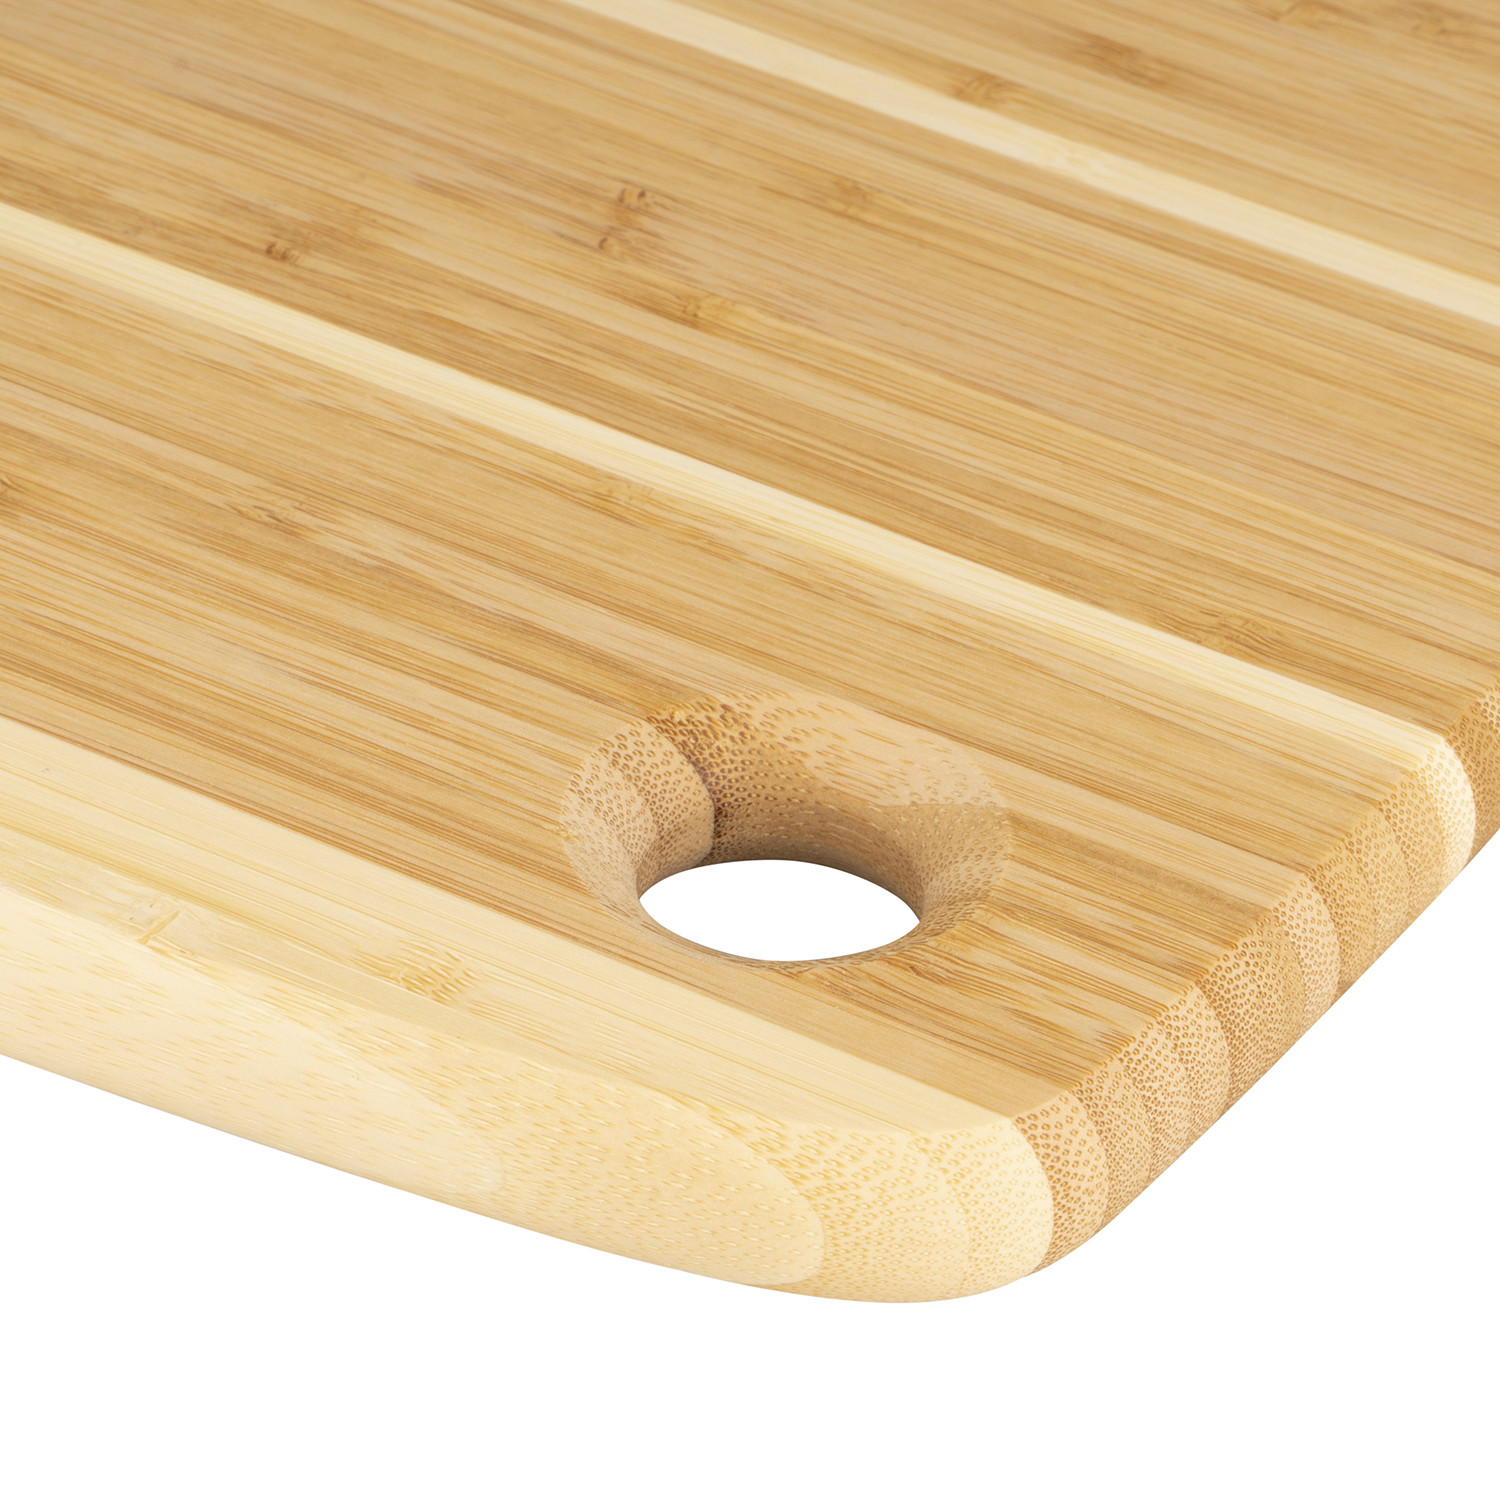 Bamboo Chopping Board with Thumb Hole Image 3